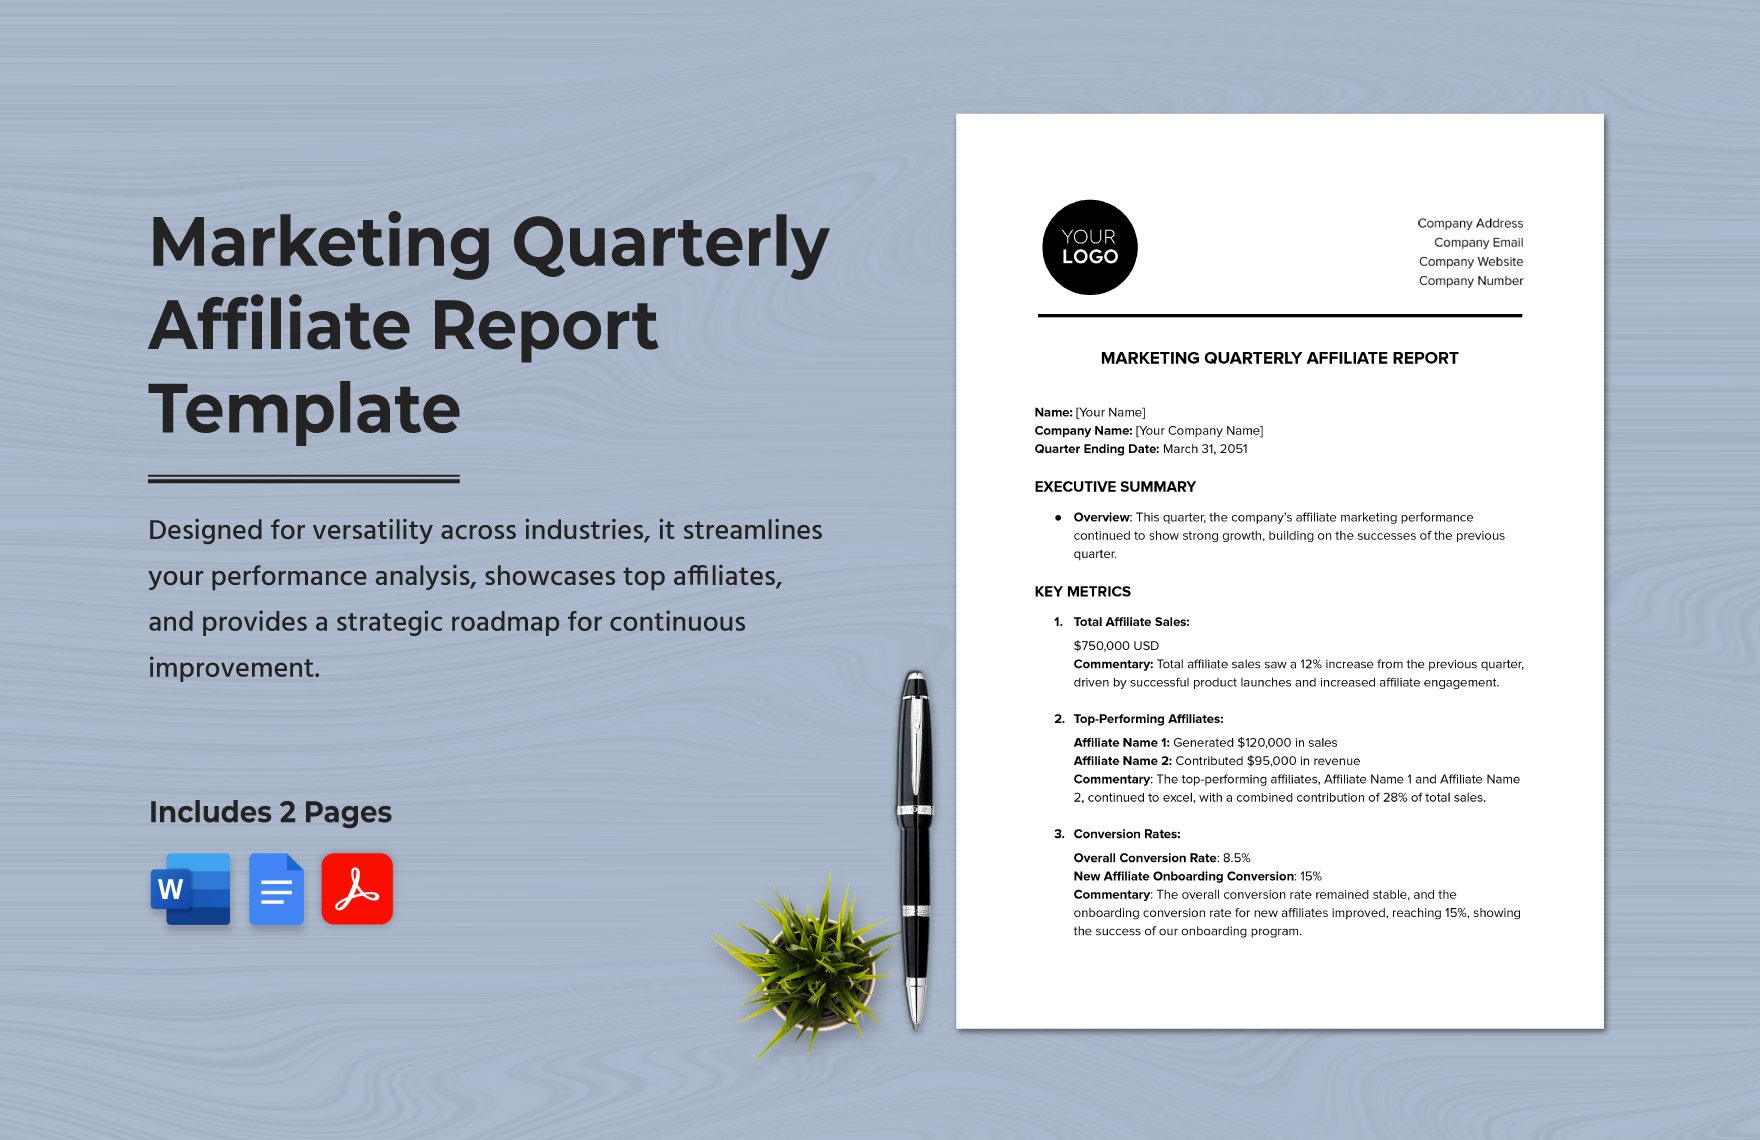 Marketing Quarterly Affiliate Report Template